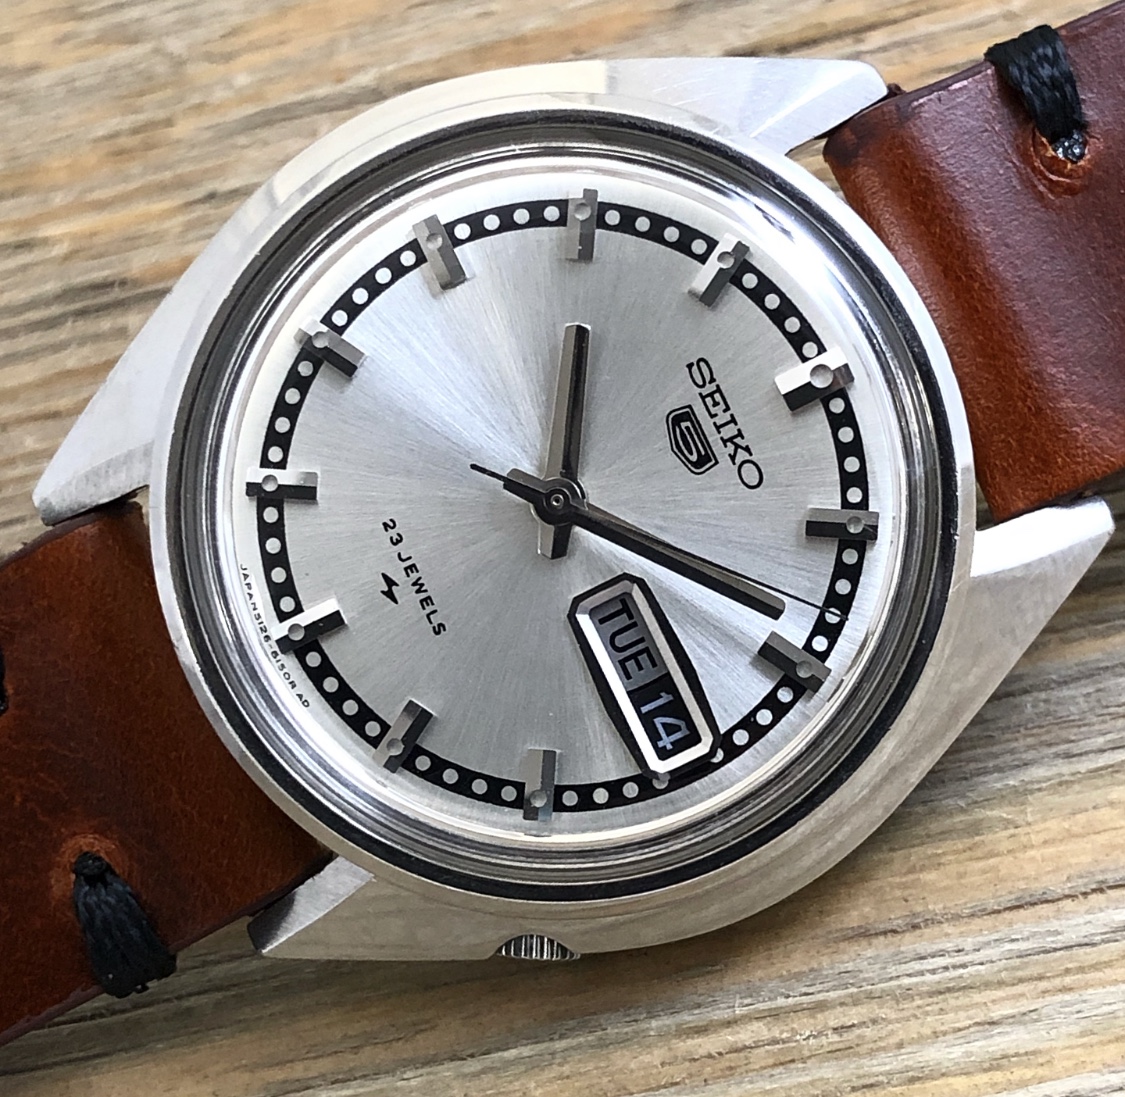 1968 Seiko 5126-8110 “5” Automatic Day/Date